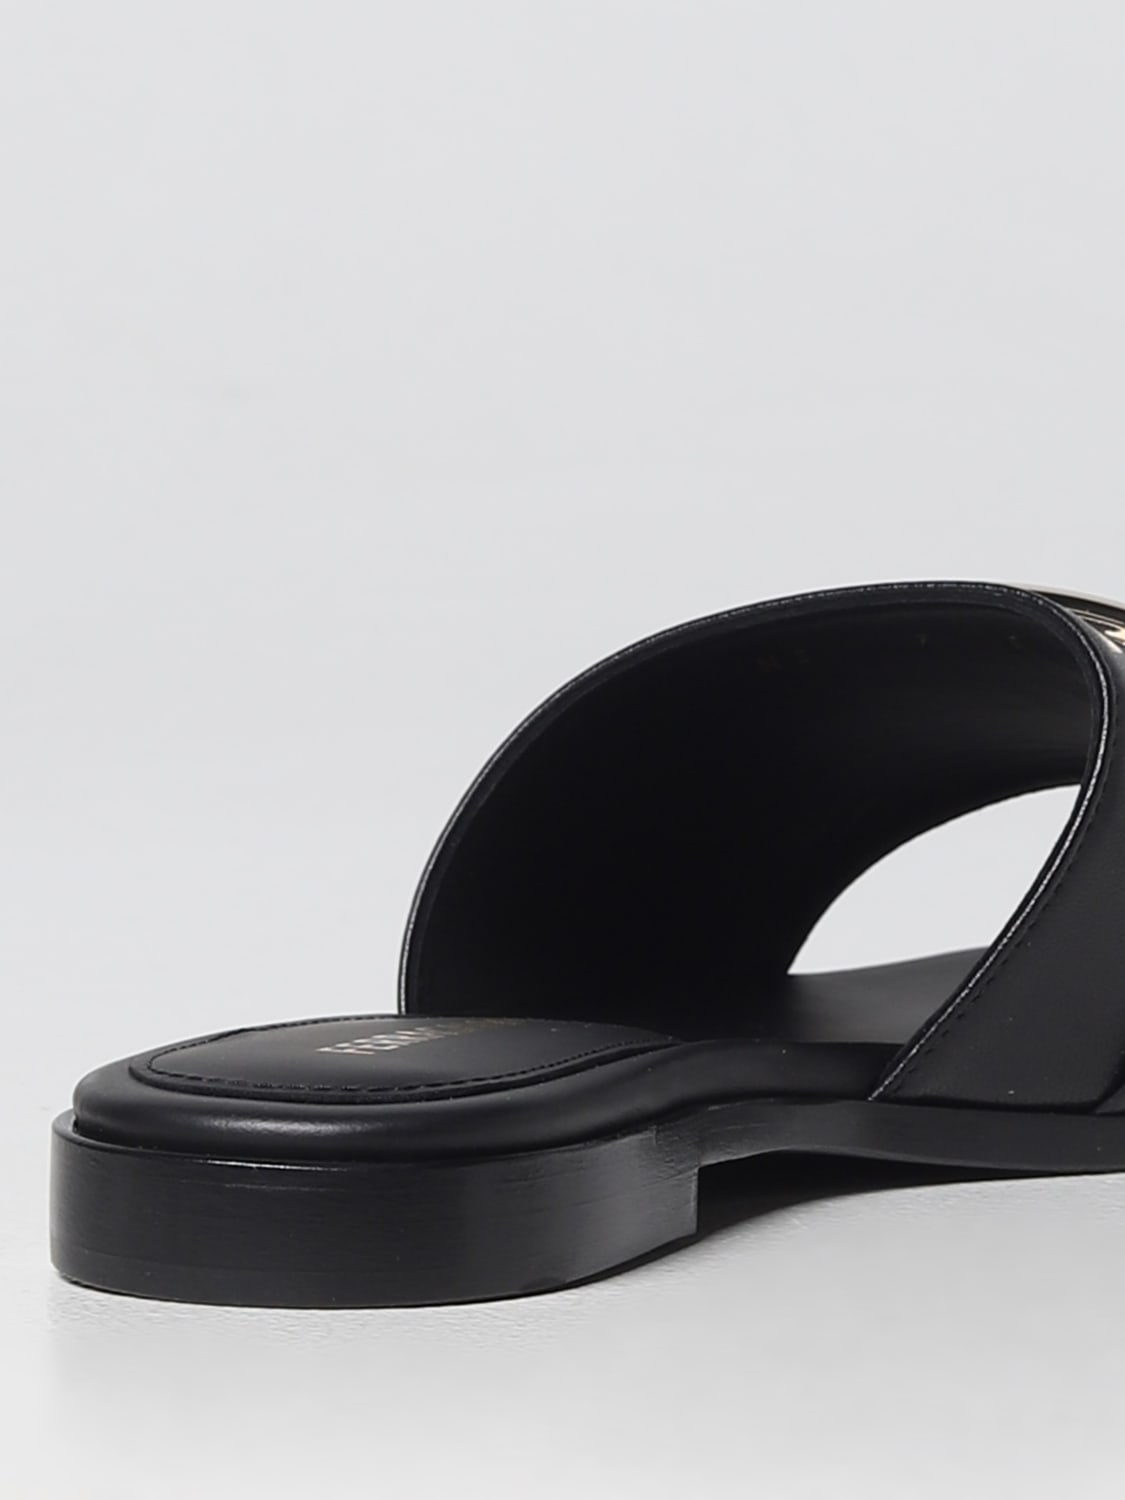 FERRAGAMO: slides in nappa - Black  FERRAGAMO flat sandals 01G170 763941  online at